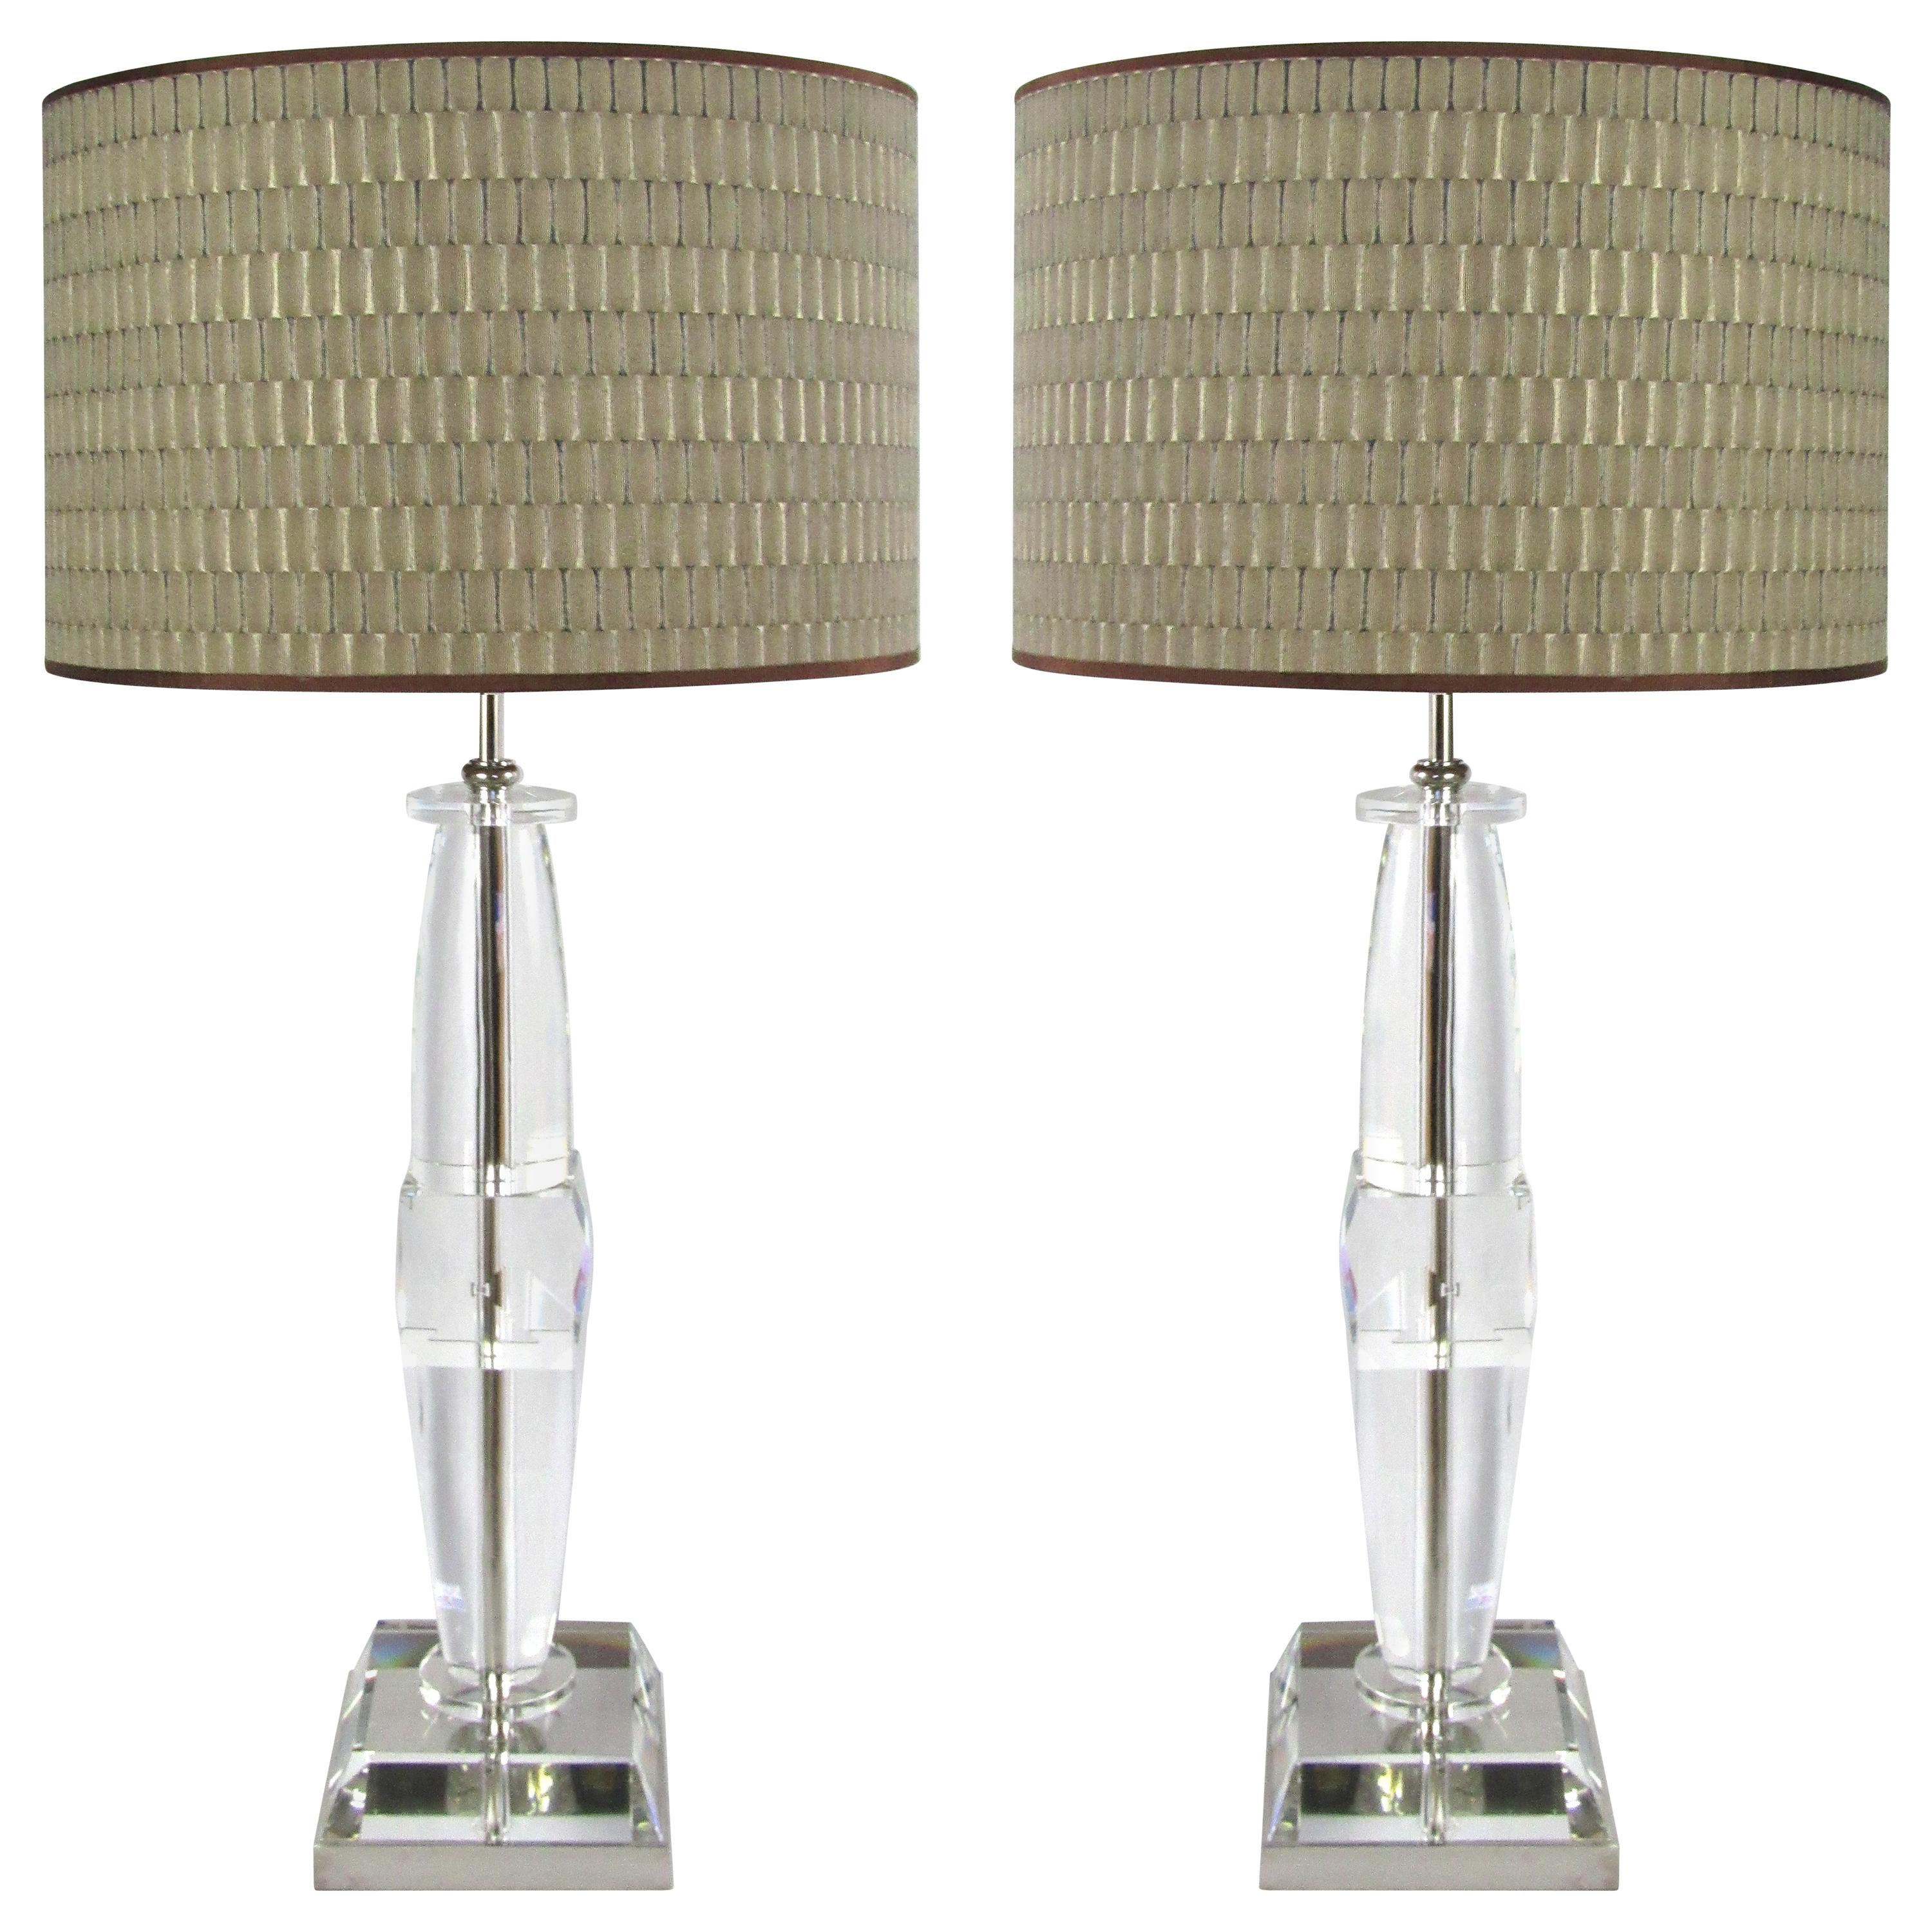 Laudarte Srl Leo Marai Golia Table Lamp by Attilio Amato, Pair Available For Sale